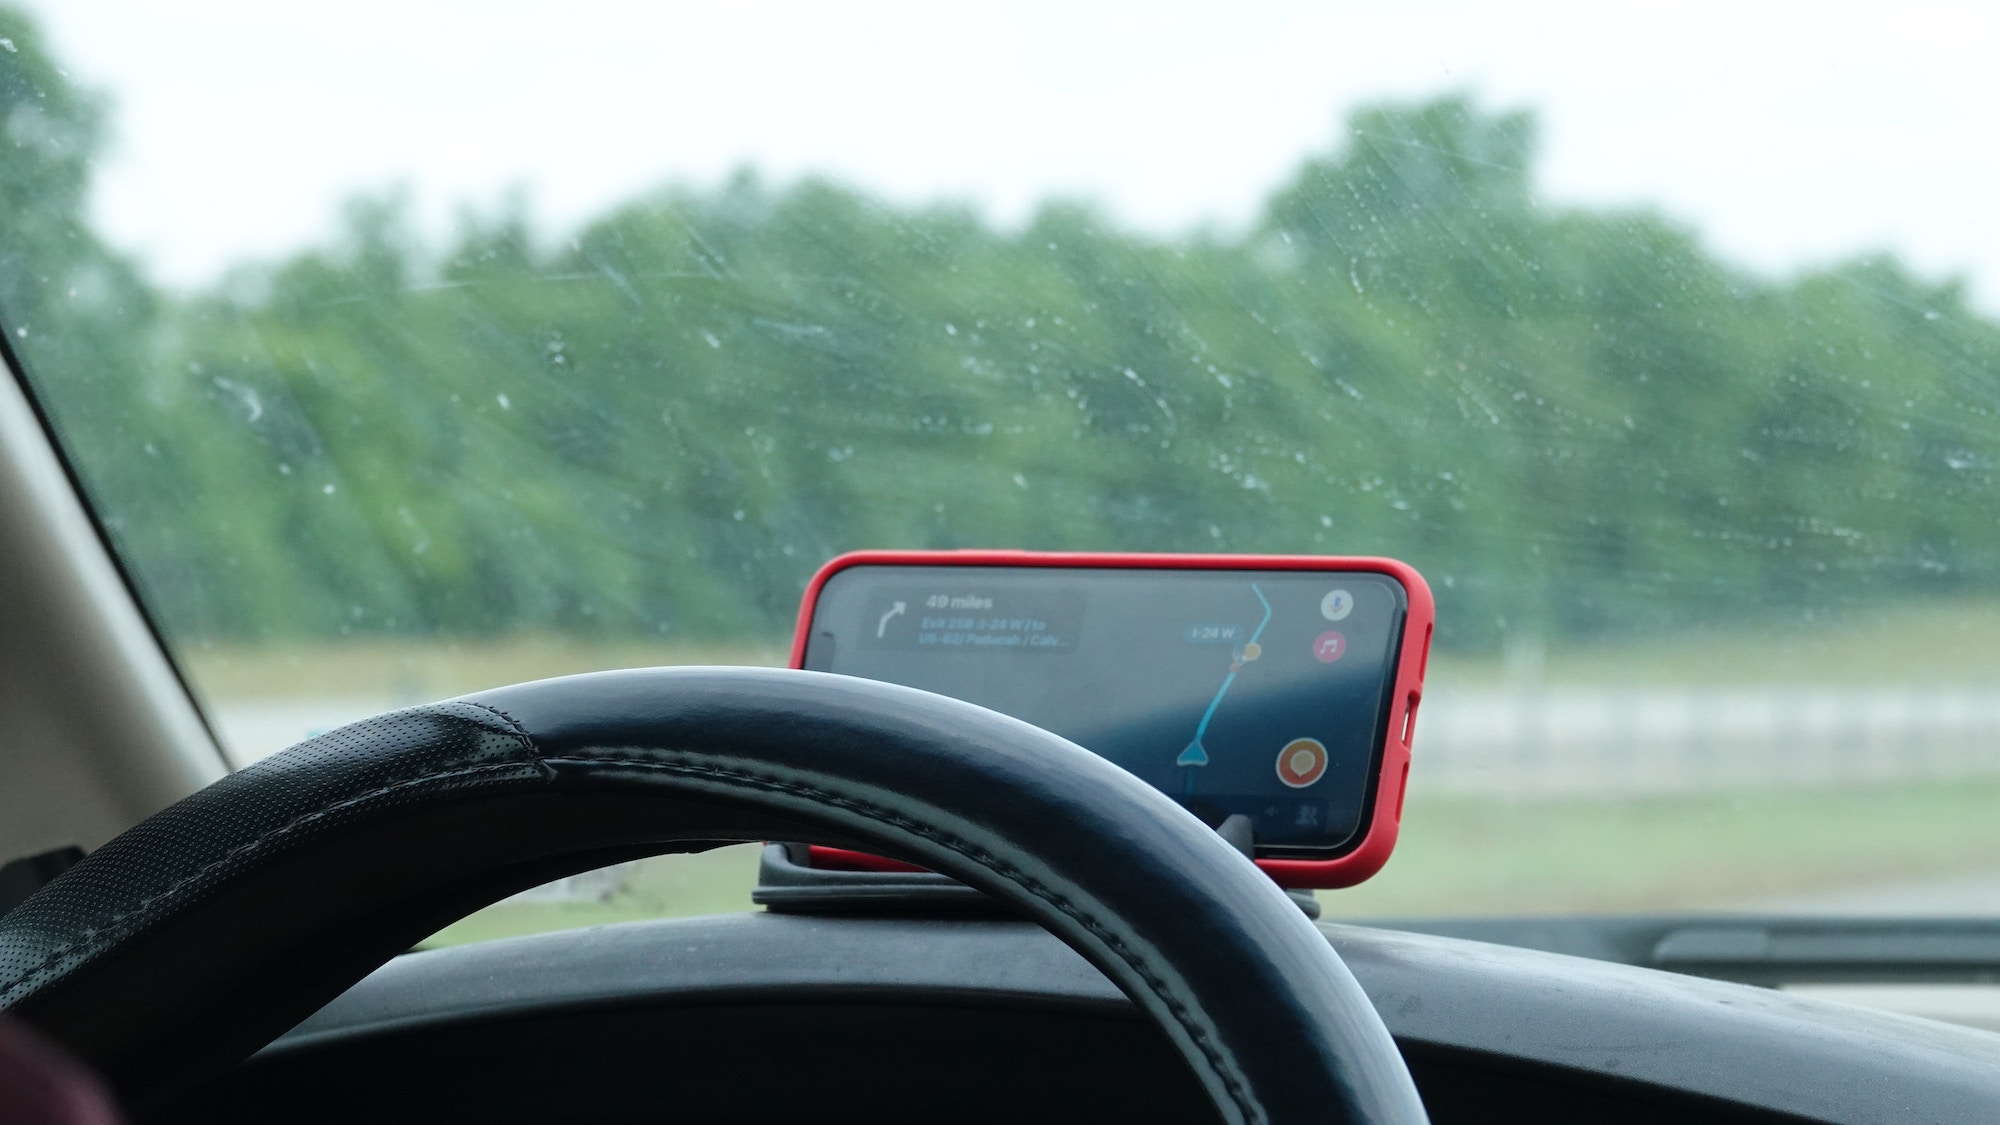 waze app on phone on car dashboard